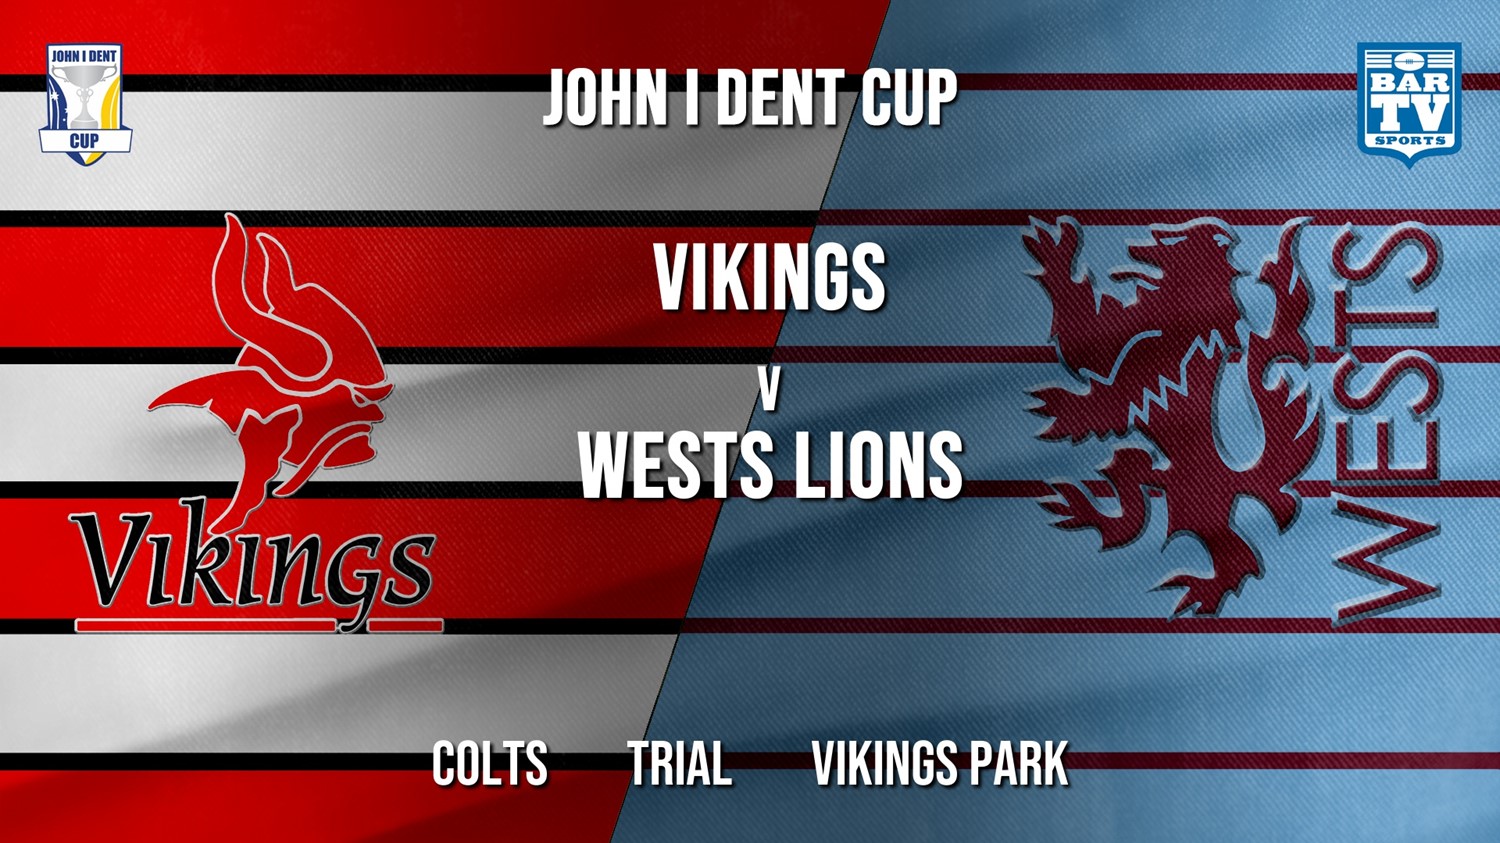 John I Dent Trial - Colts - Tuggeranong Vikings v Wests Lions Slate Image